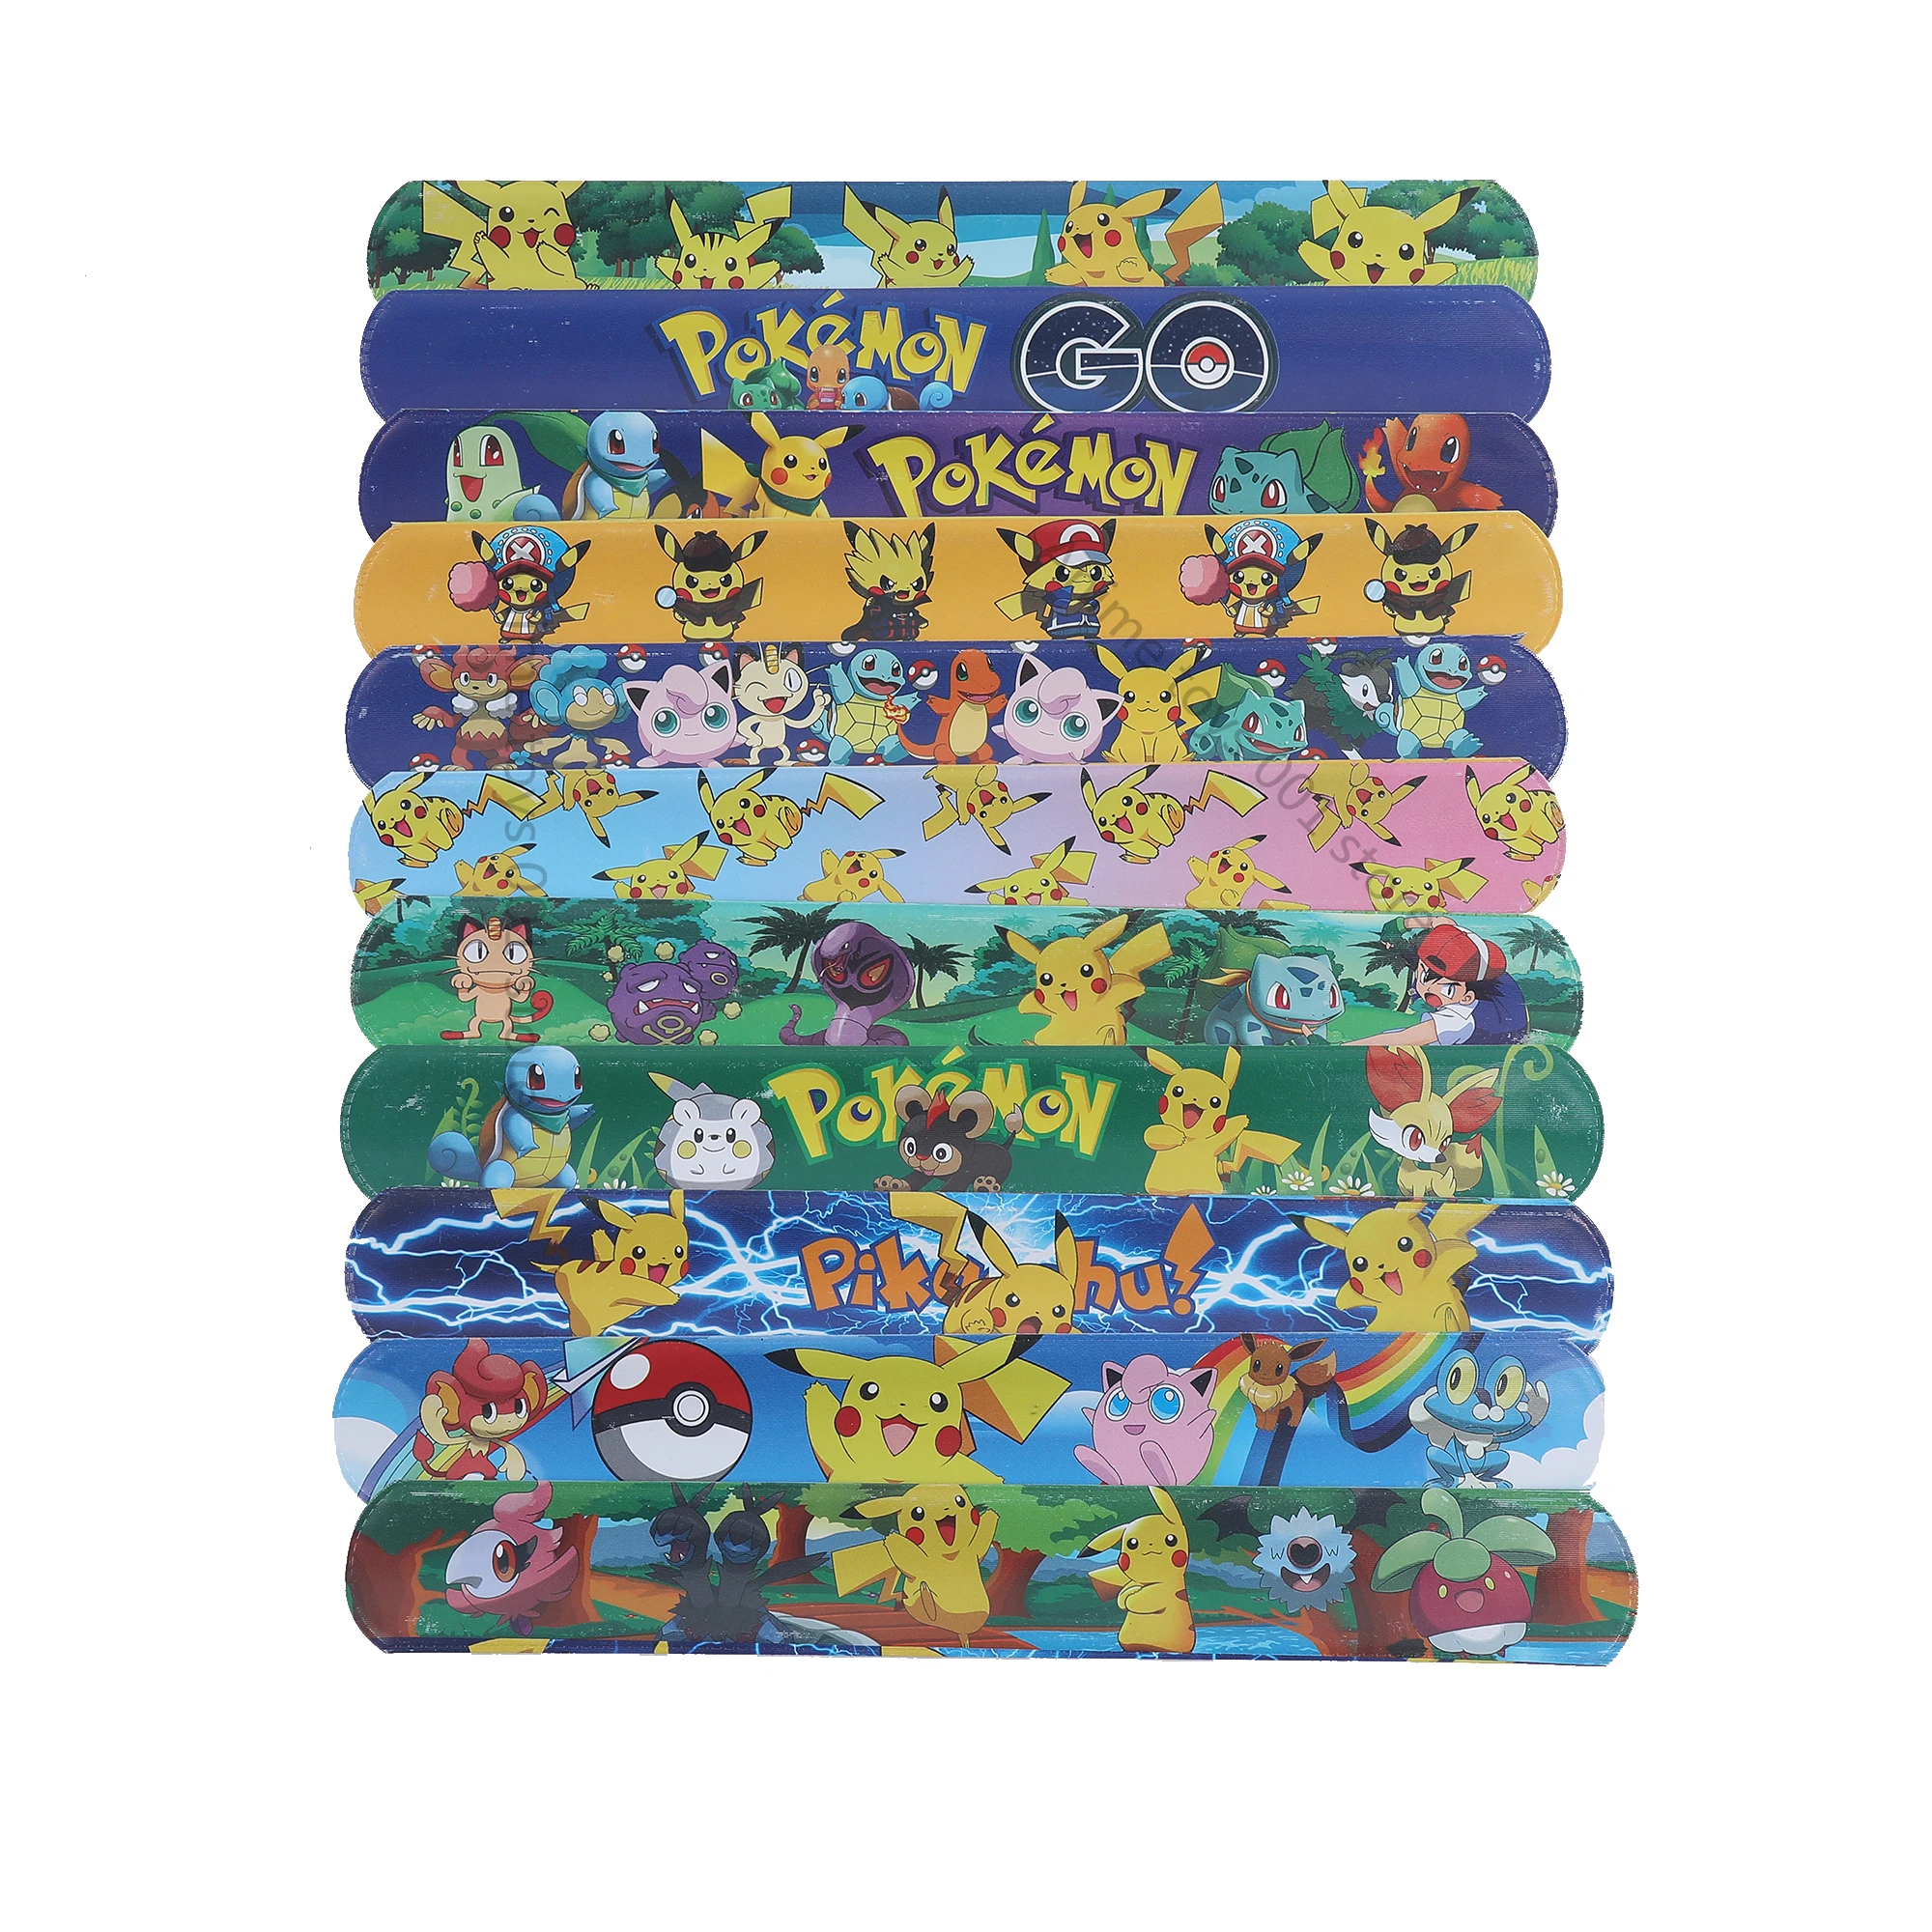 Pokemon Snap bracciali Pikachu Figurine Anime Wristband bambino Pocket Slap  Band Puzzle Toys For Boys Girls Birthday Party Gifts - AliExpress